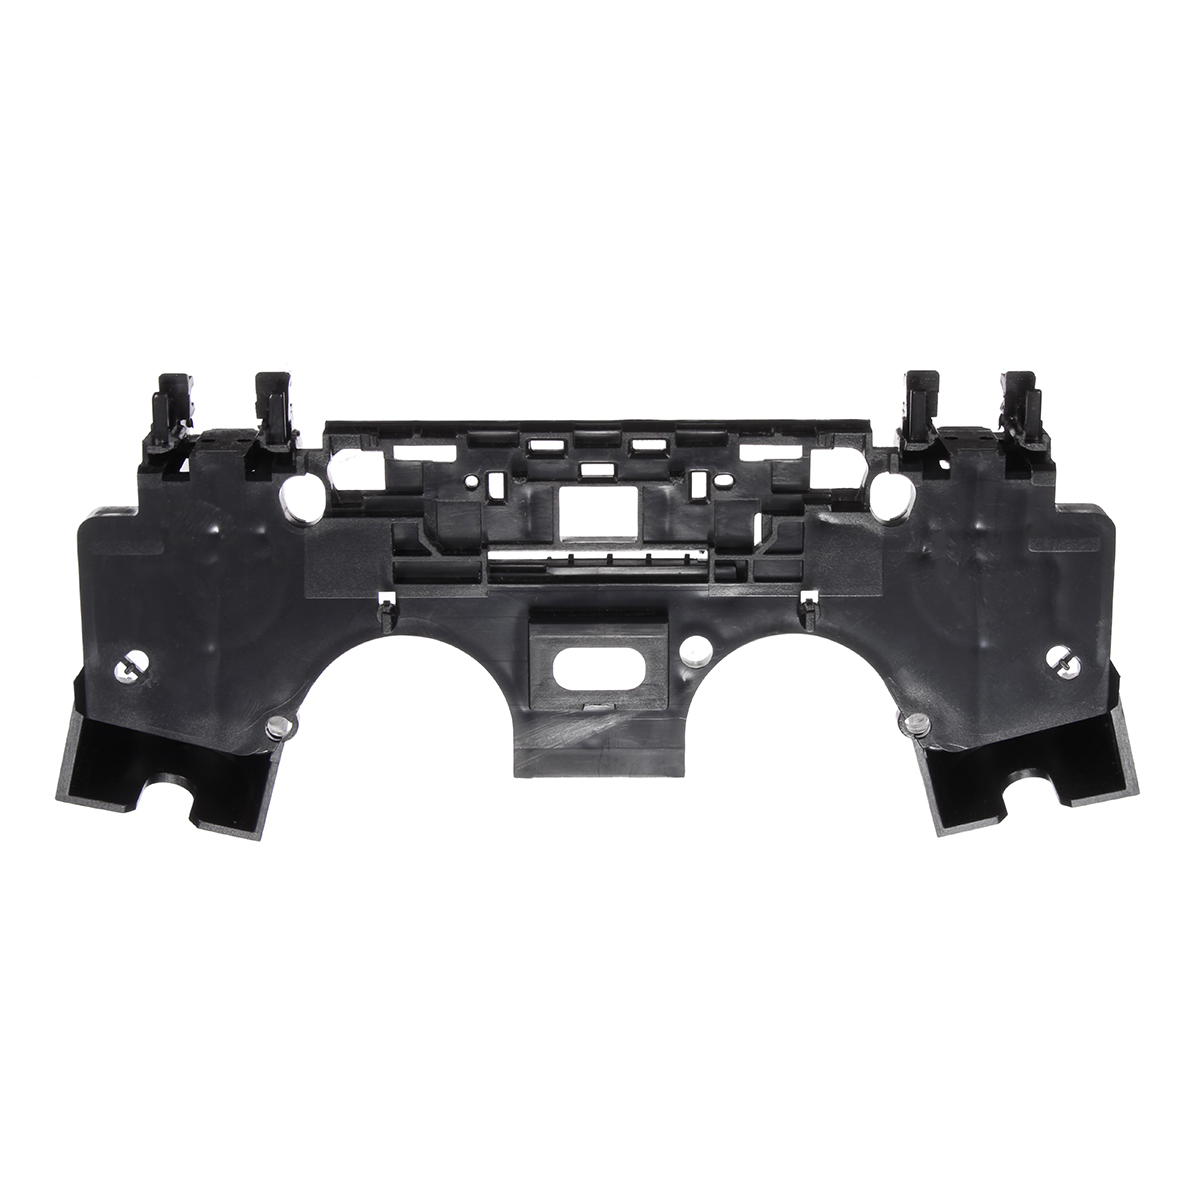 R1 L1 Key Holder Internal Shock Motor Support Stand Inner Frame For Play Station 4 For PS4 Controller 6